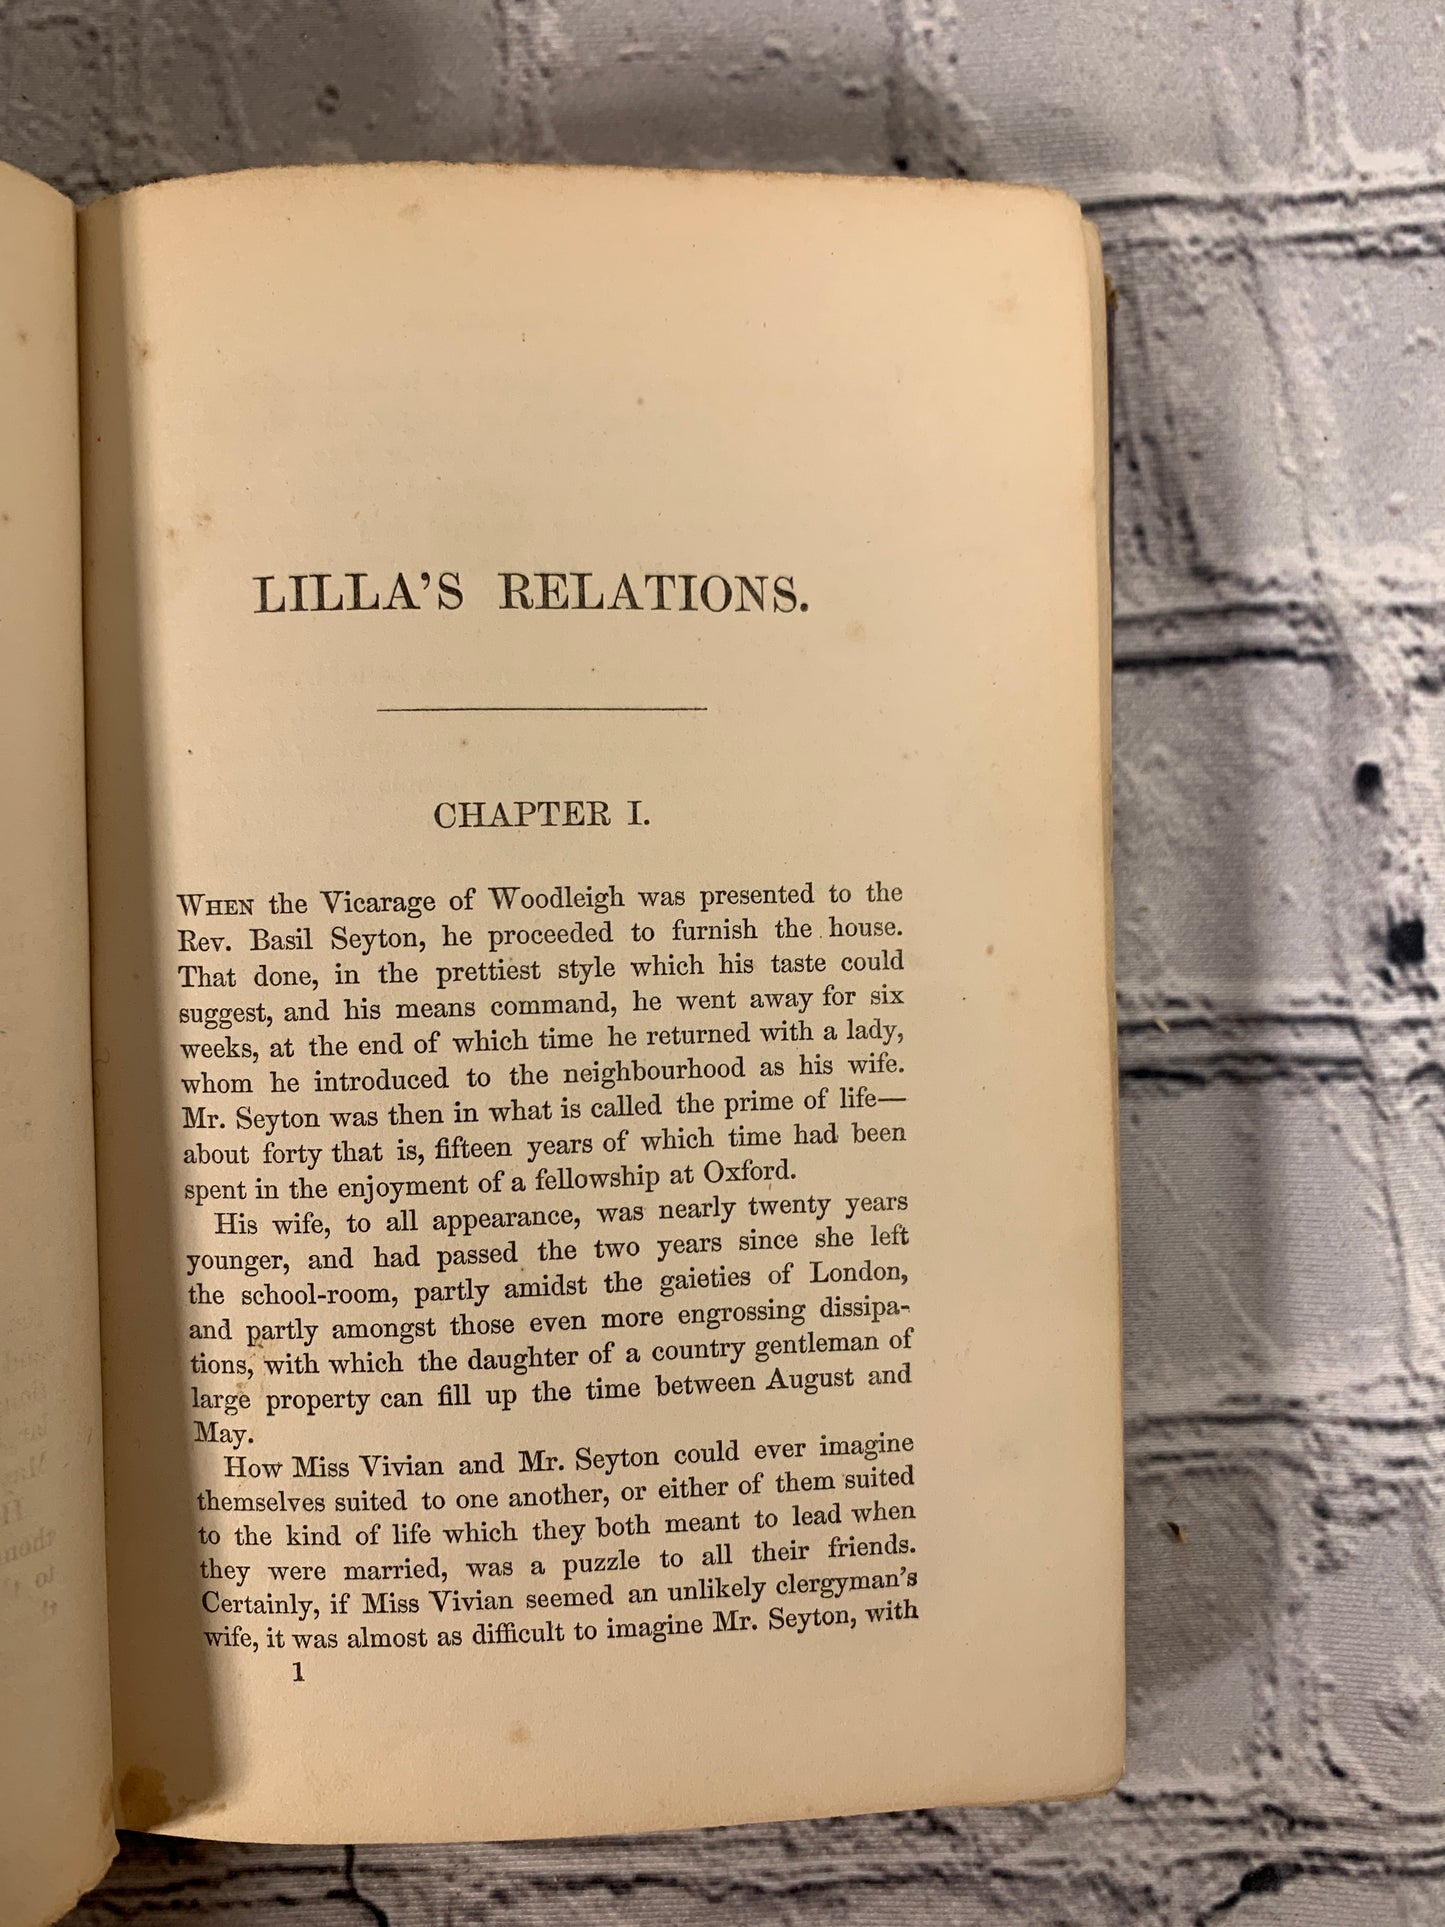 Lilla's Relations by Henrietta [1867]